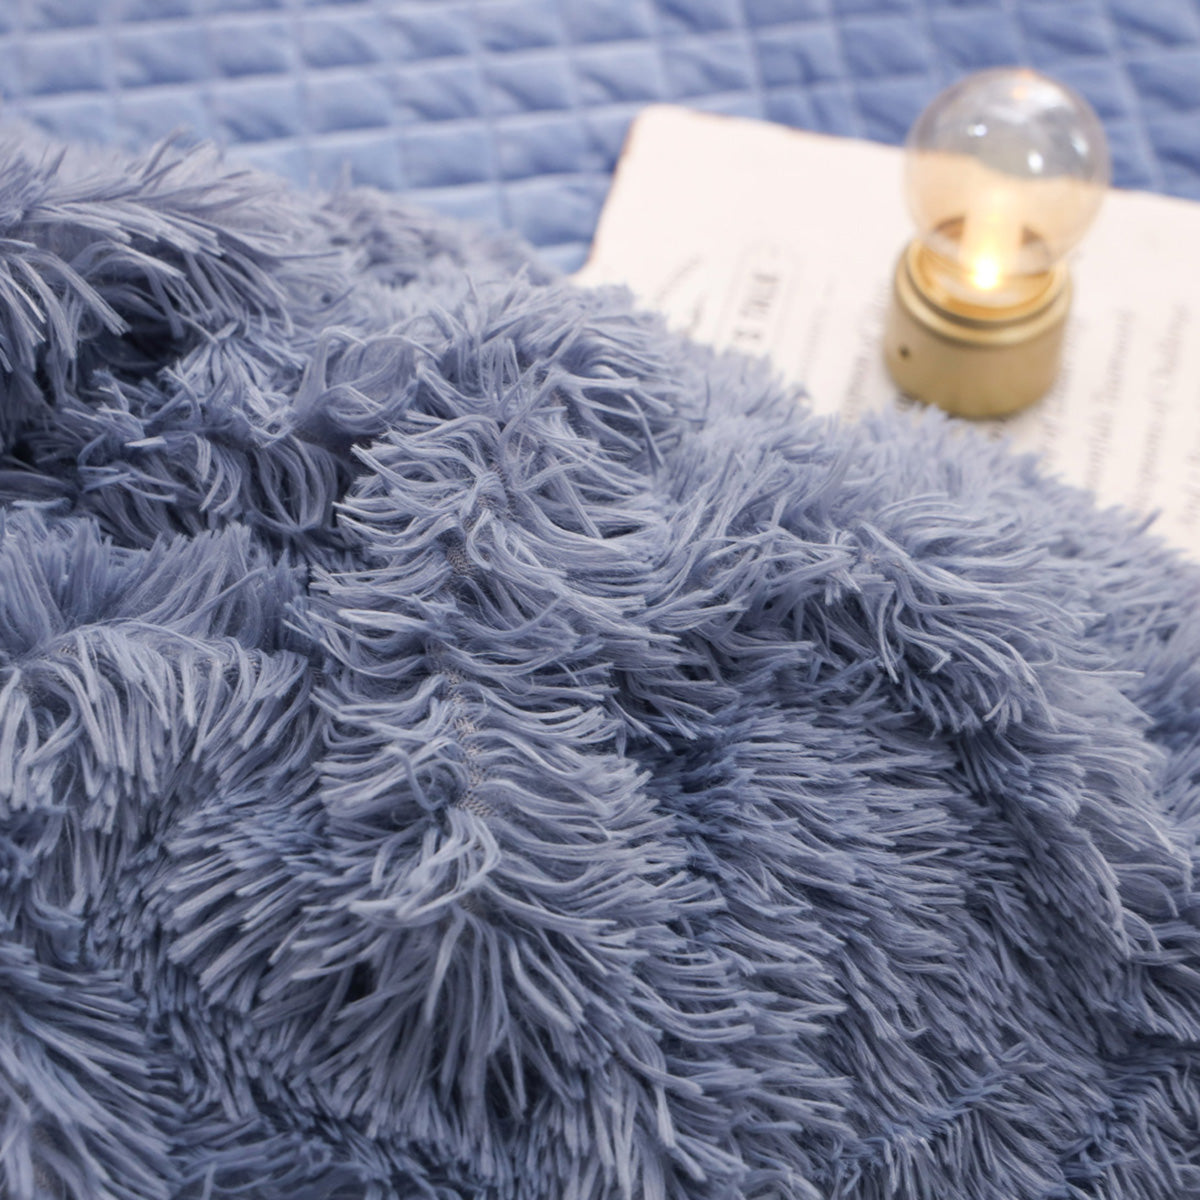 Sapphire Blue Duvet Cover Set With 2 Pillow Cases